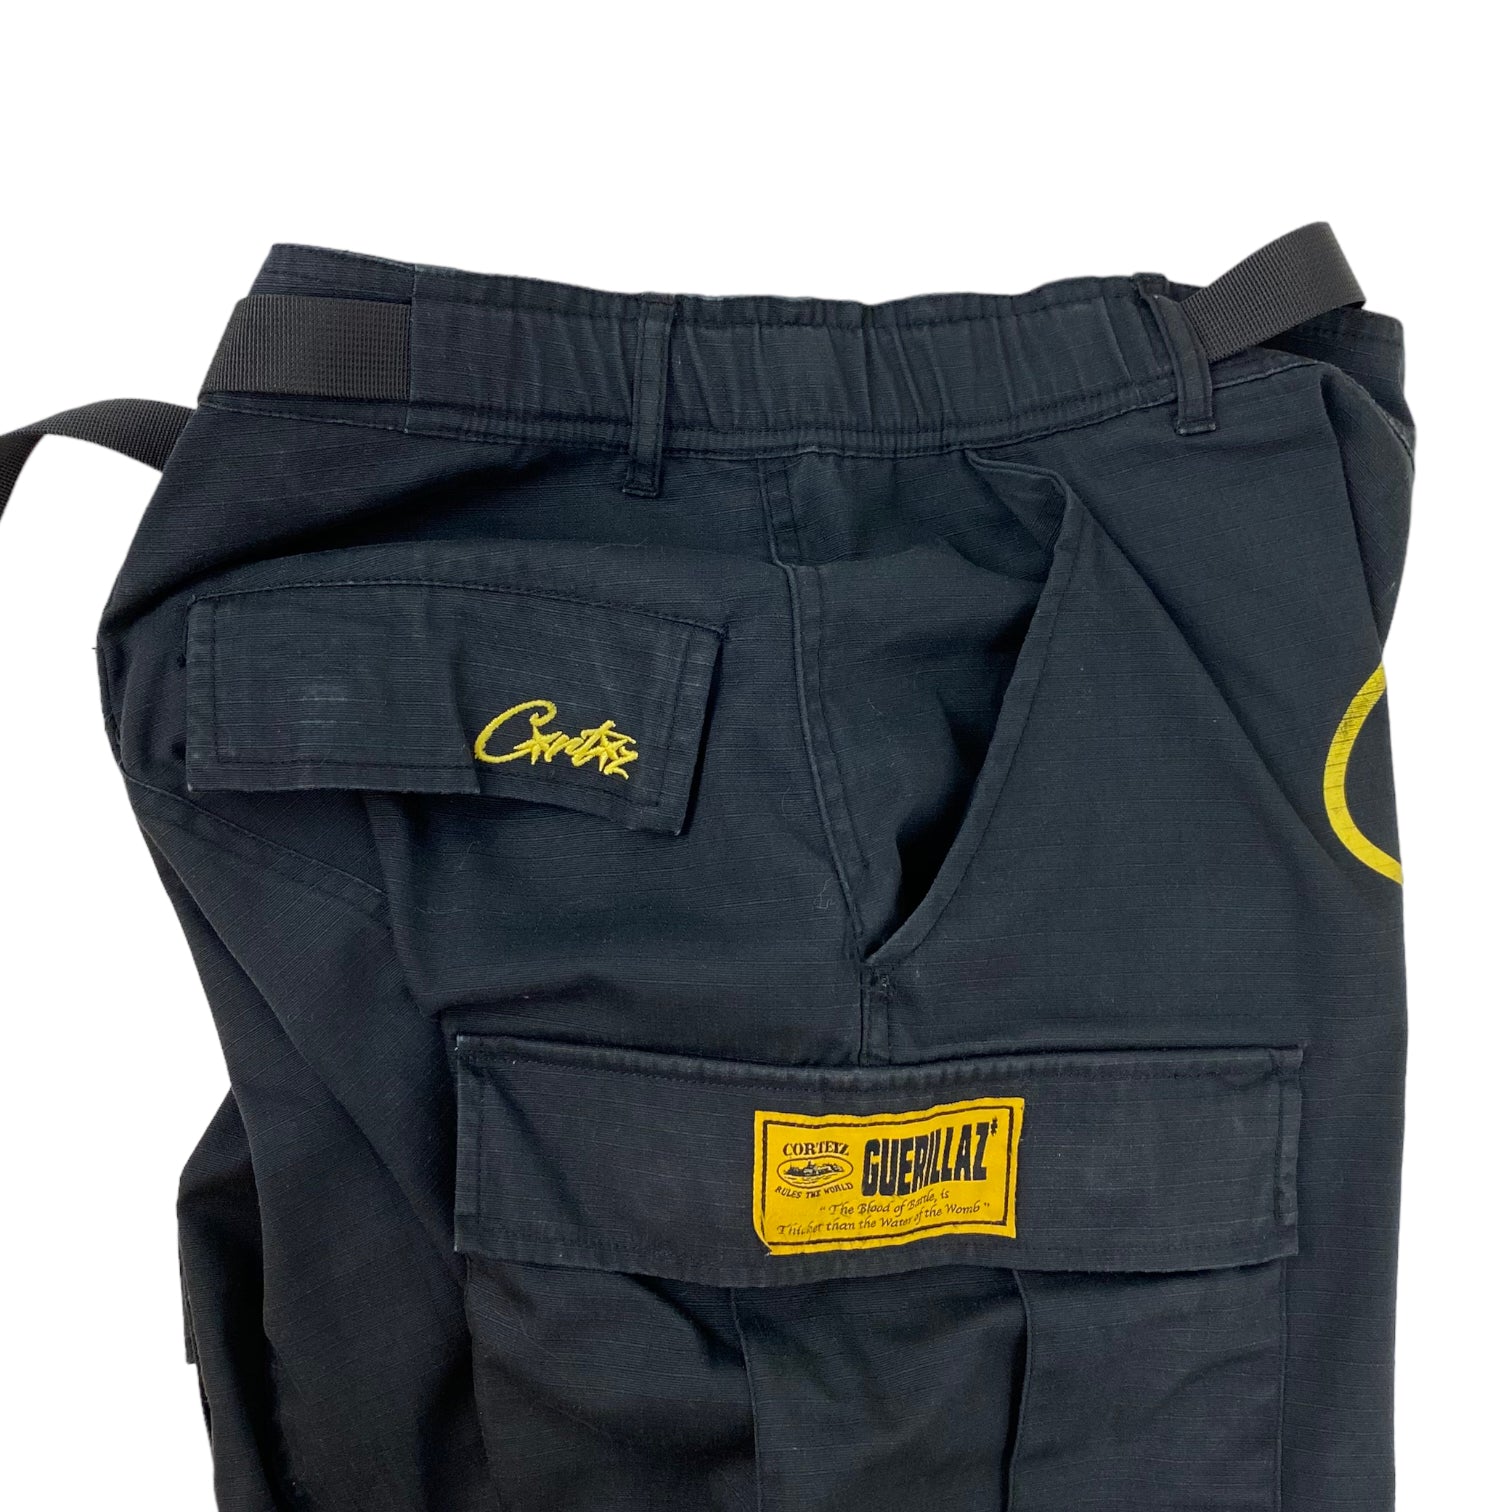 Corteiz Guerillaz Cargo Pants Black/Yellow